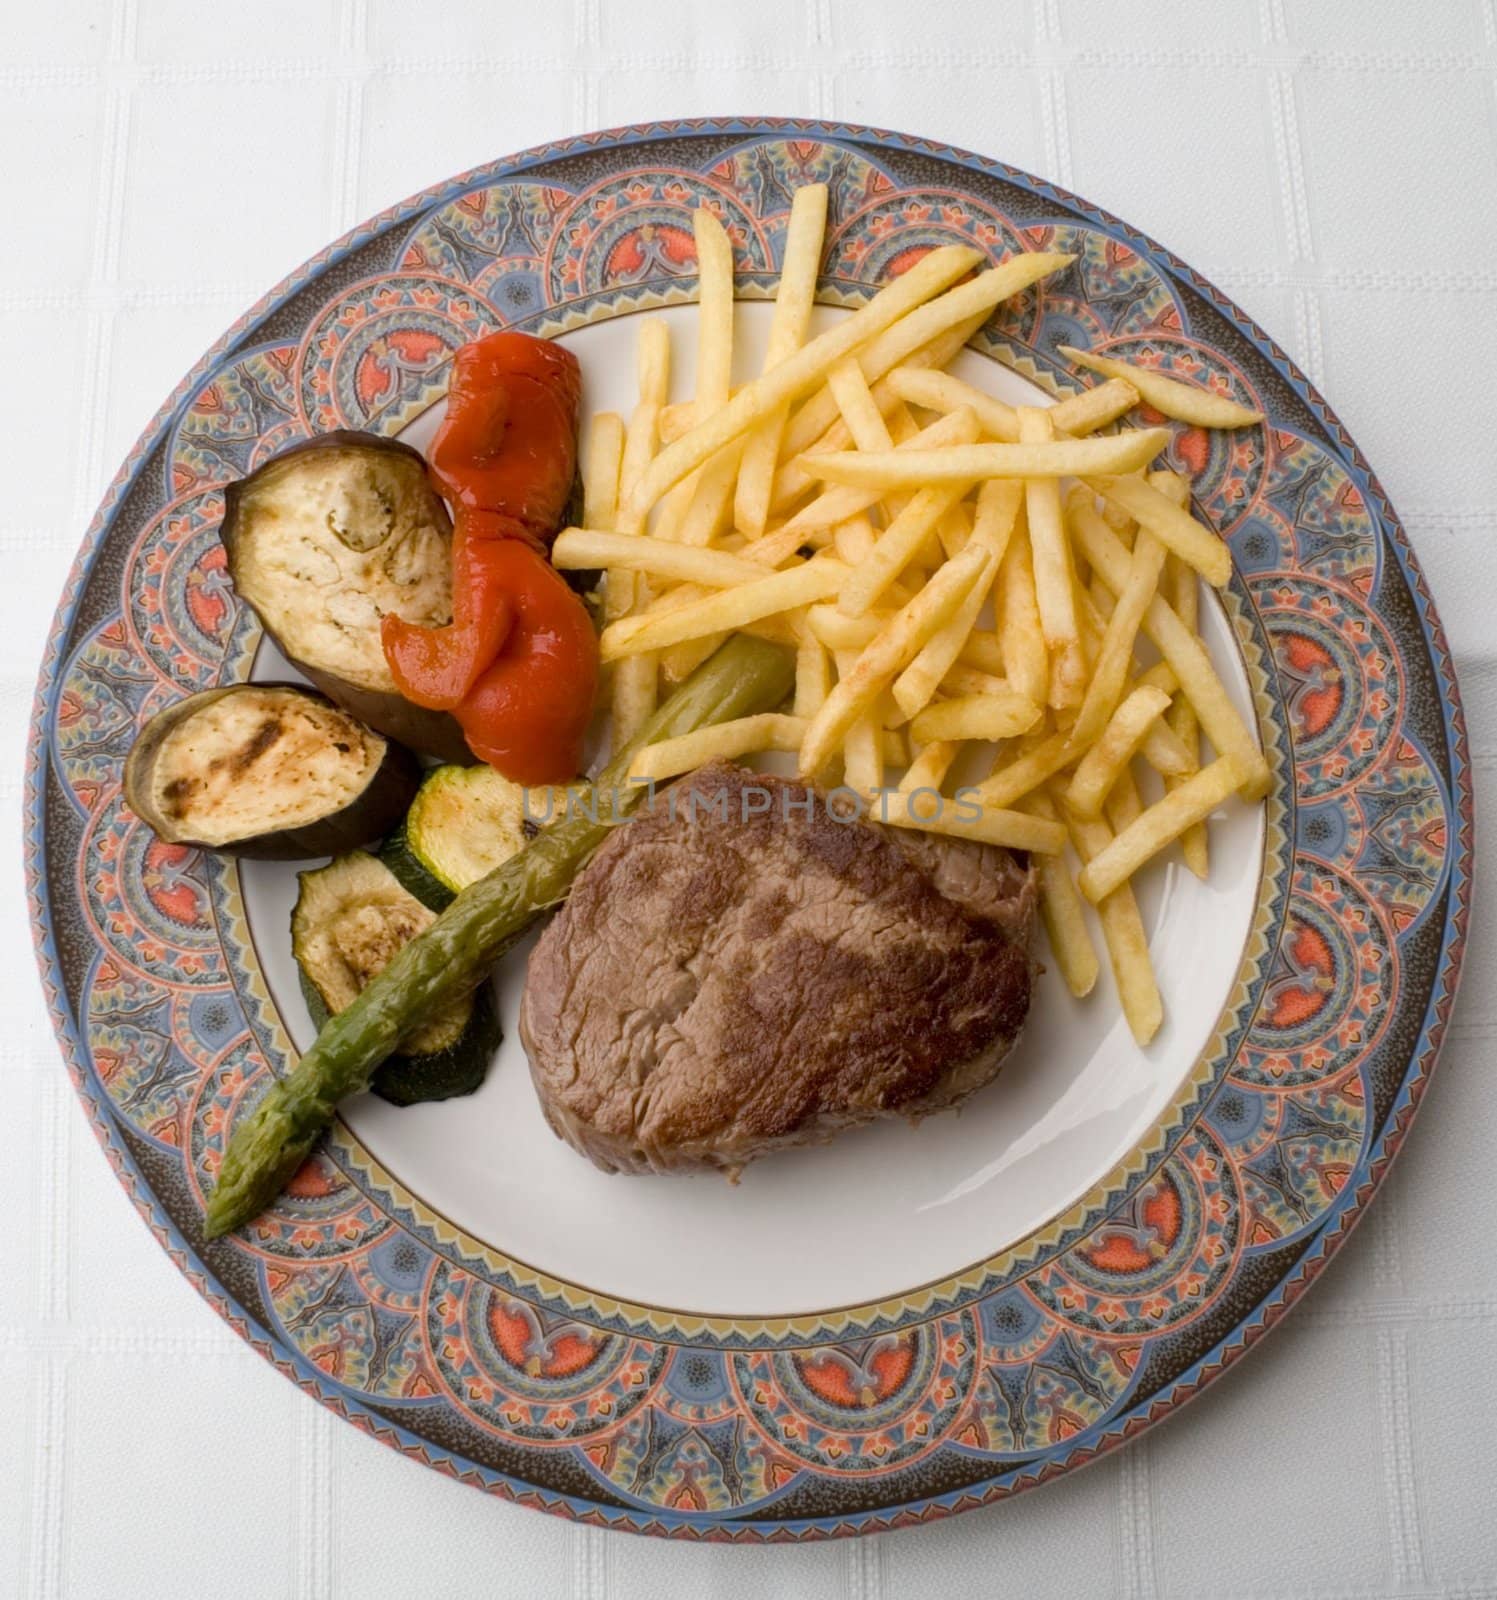 Steak with chips by olgaolga